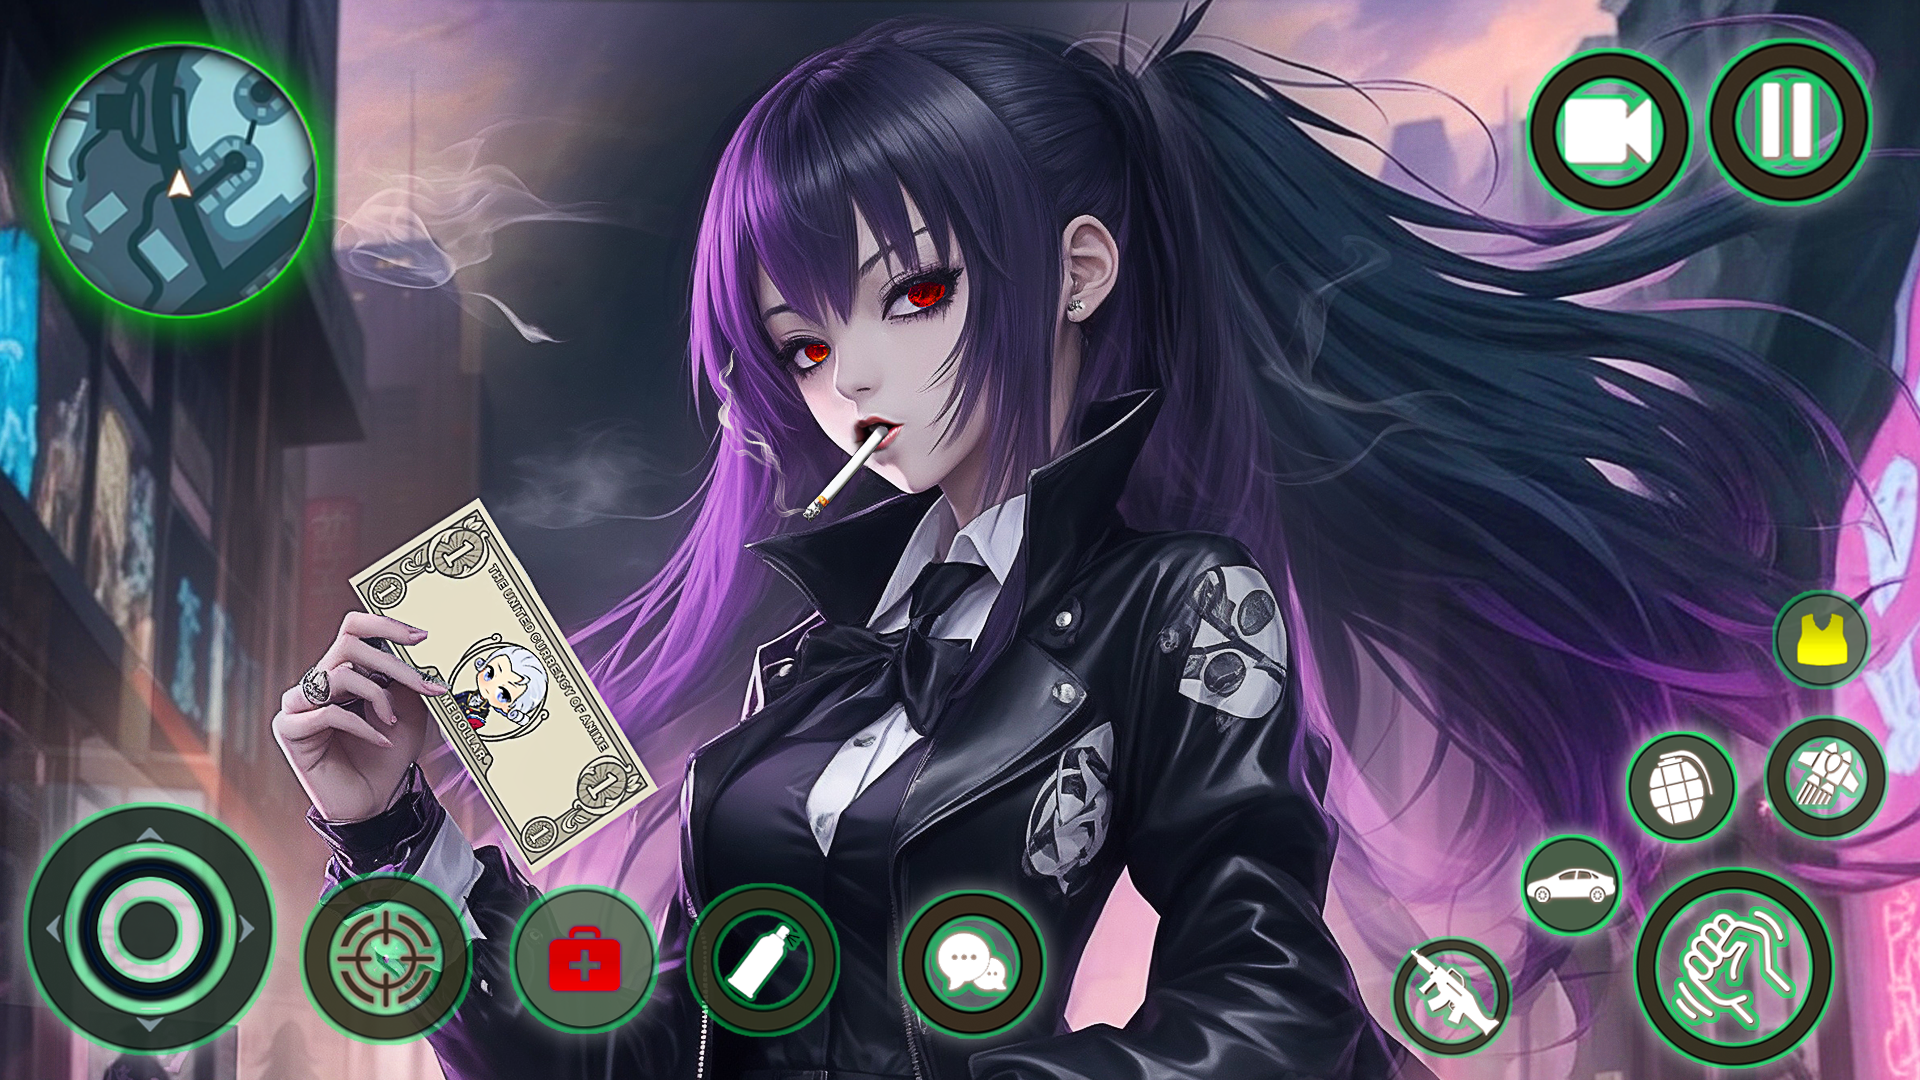 Crime Scene - Other & Anime Background Wallpapers on Desktop Nexus (Image  859104)